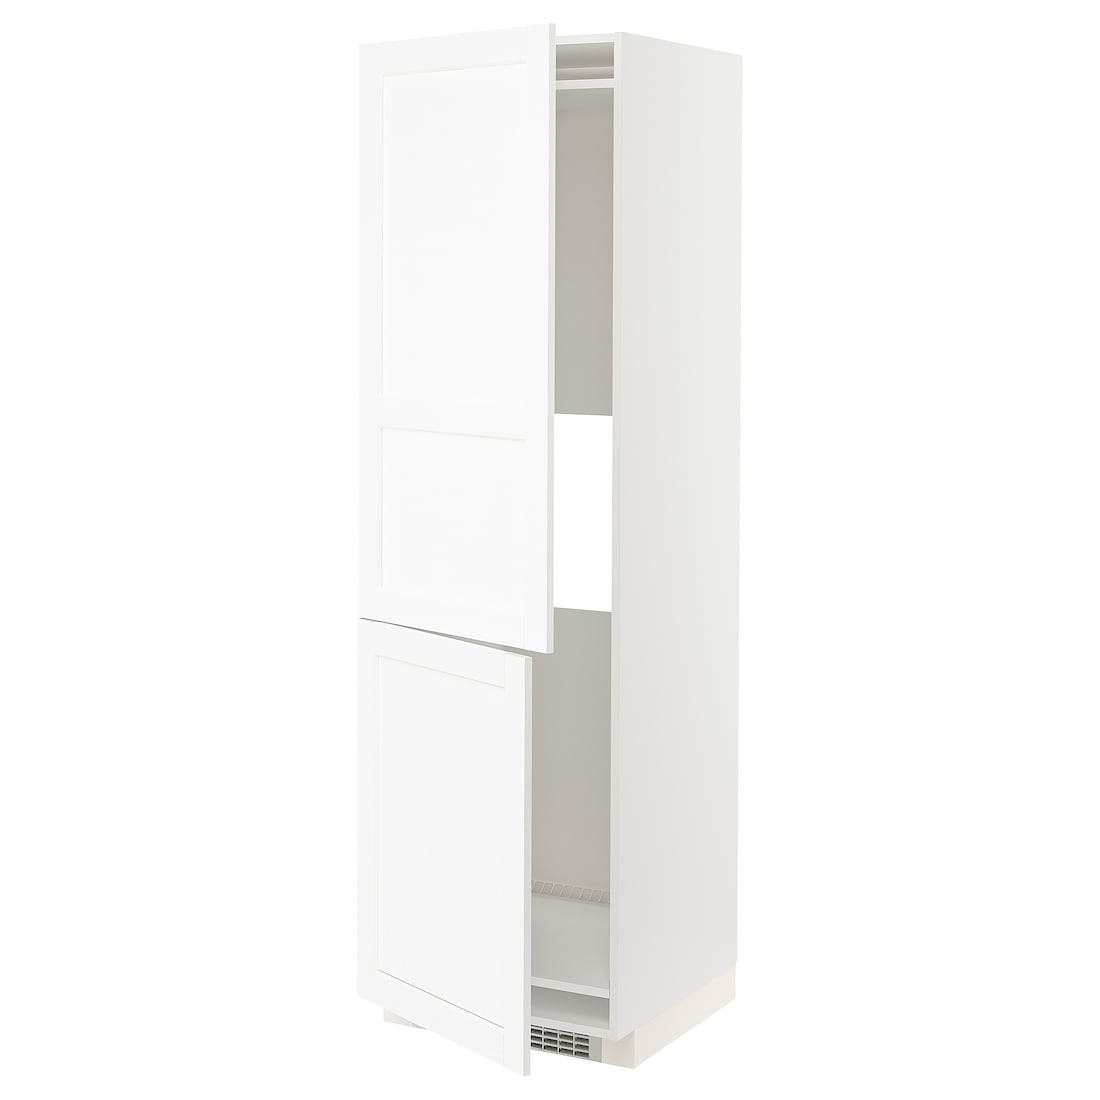 IKEA METOD МЕТОД Высокий шкаф для холодильника / морозильника, белый Enköping / белый имитация дерева, 60x60x200 см 39473526 394.735.26